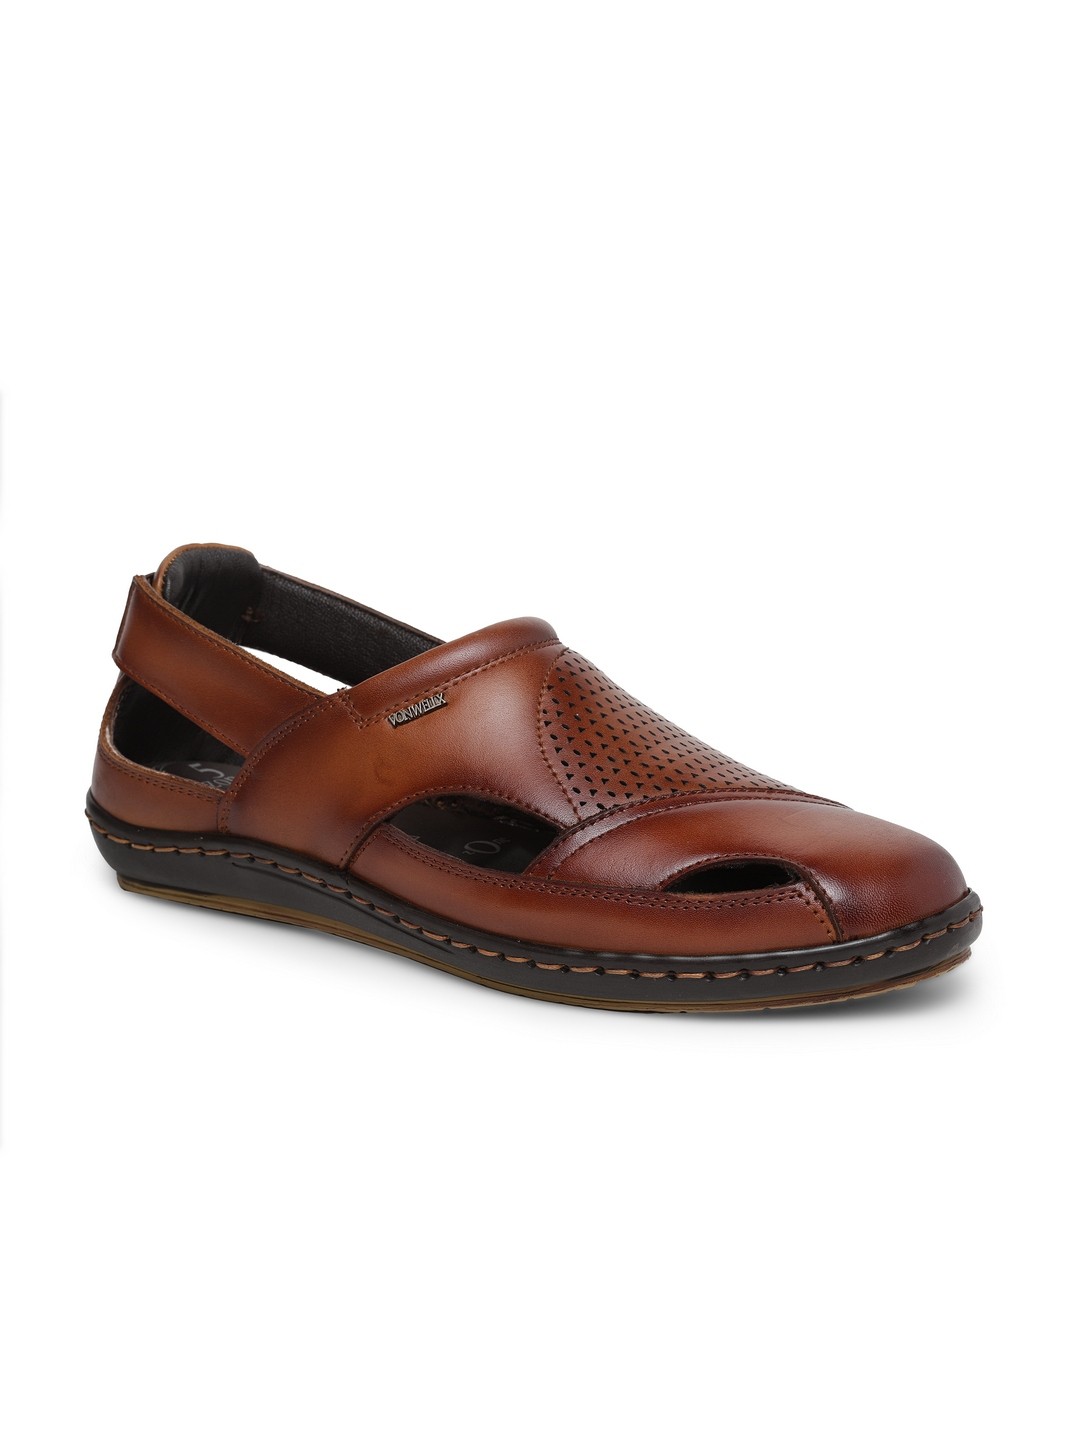 Buy Von Wellx Germany Comfort Men's Tan Sandal Eddie Online in Lucknow